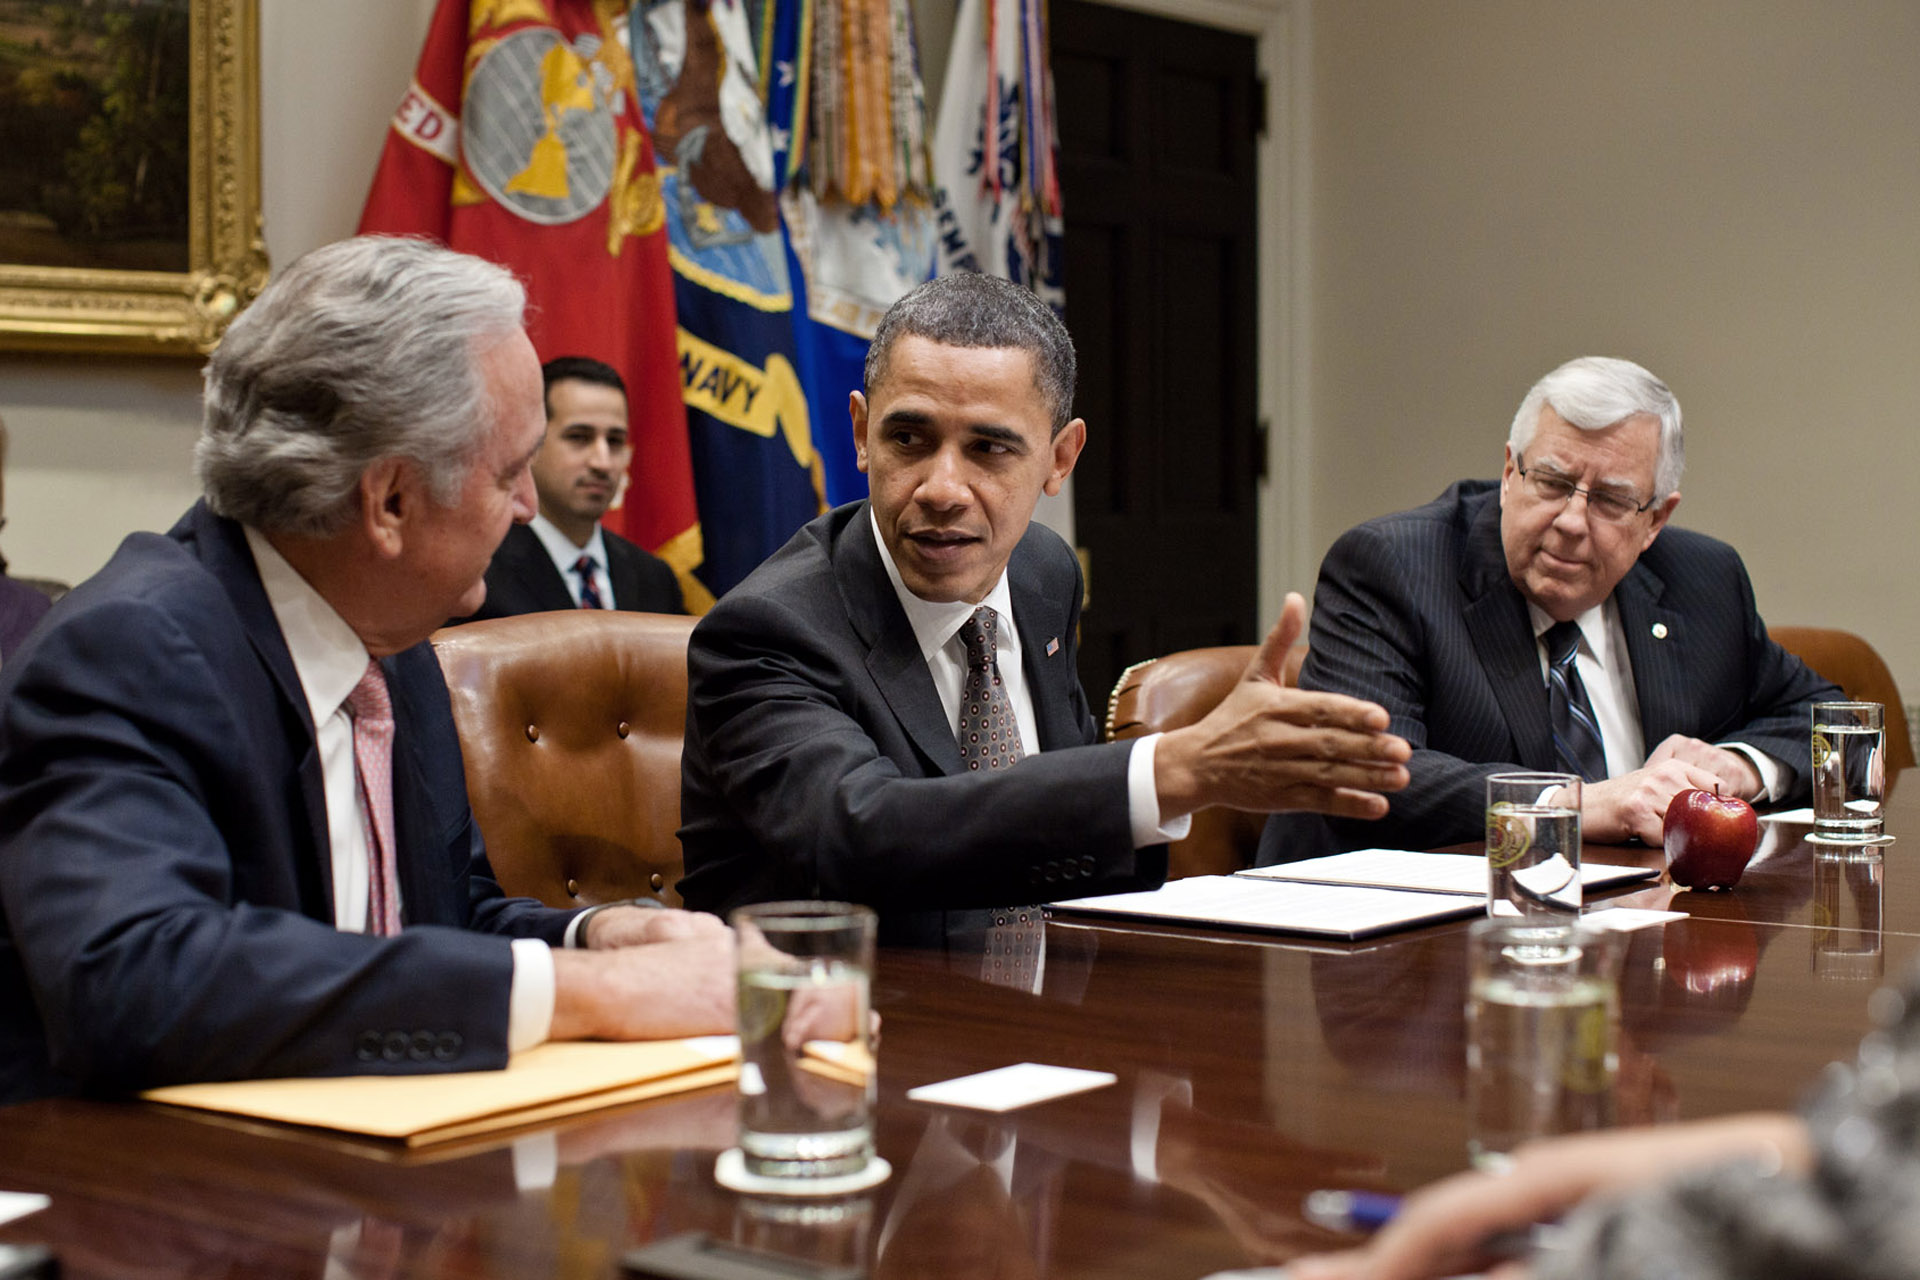 President Obama Meets With Legislators on NCLB